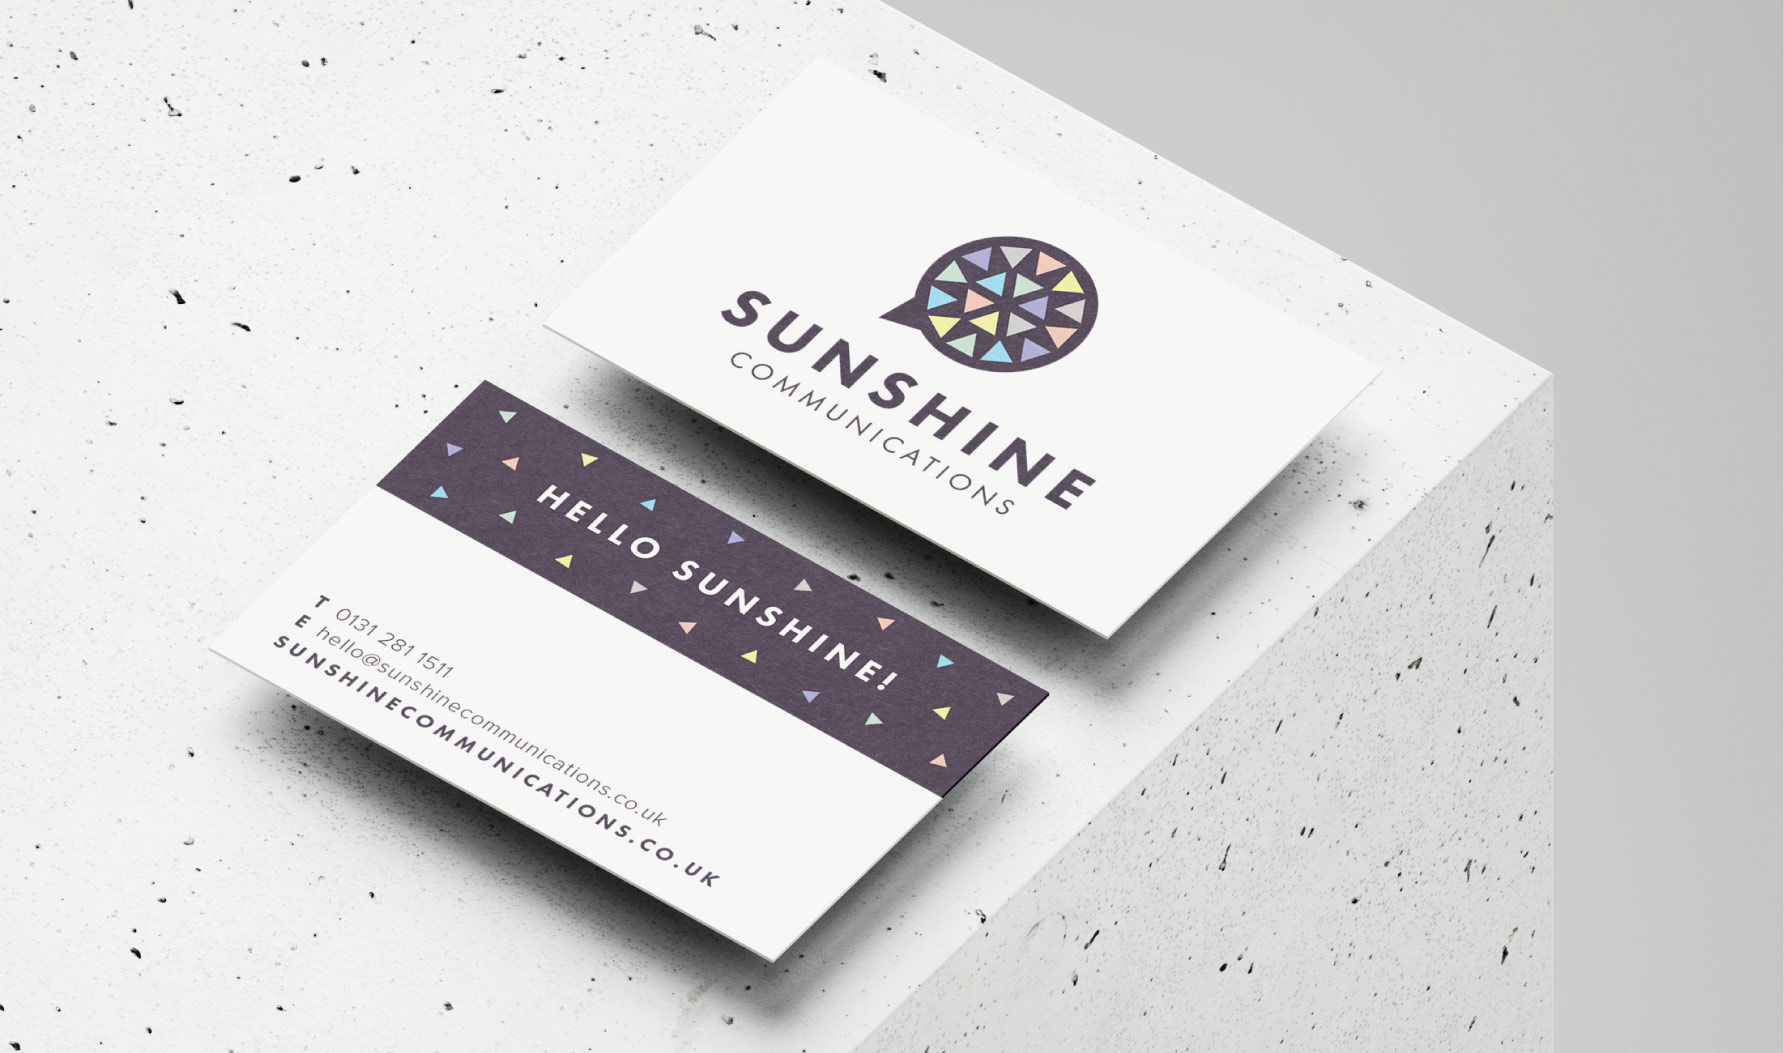 Sunshine Communications business card